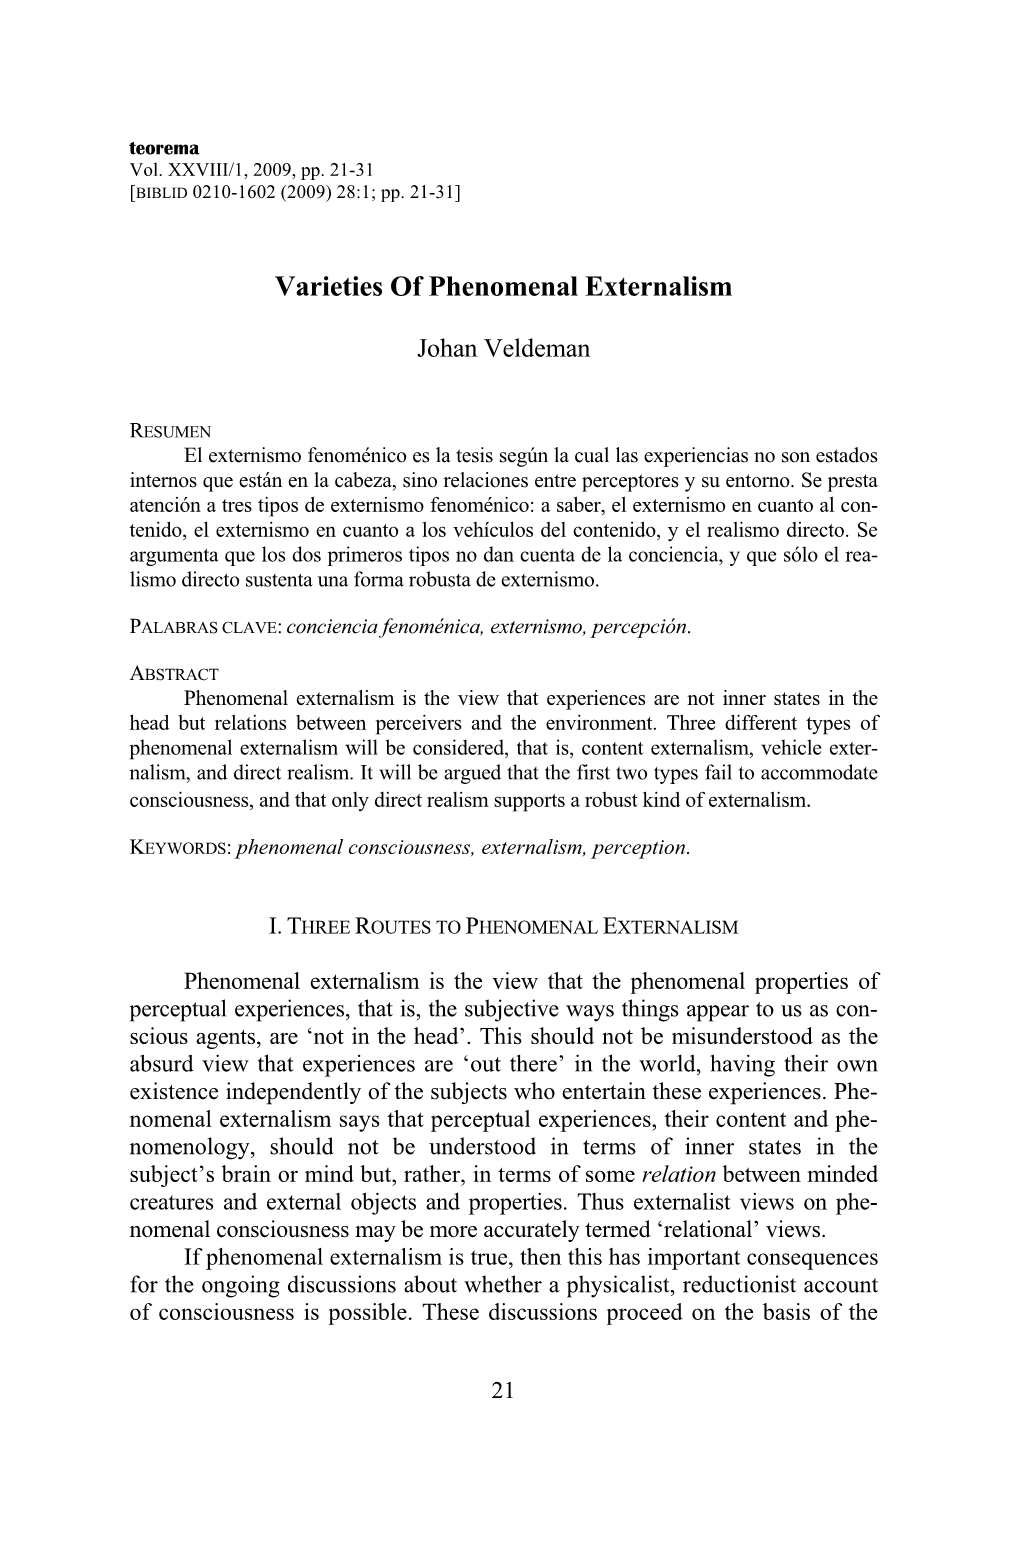 Varieties of Phenomenal Externalism